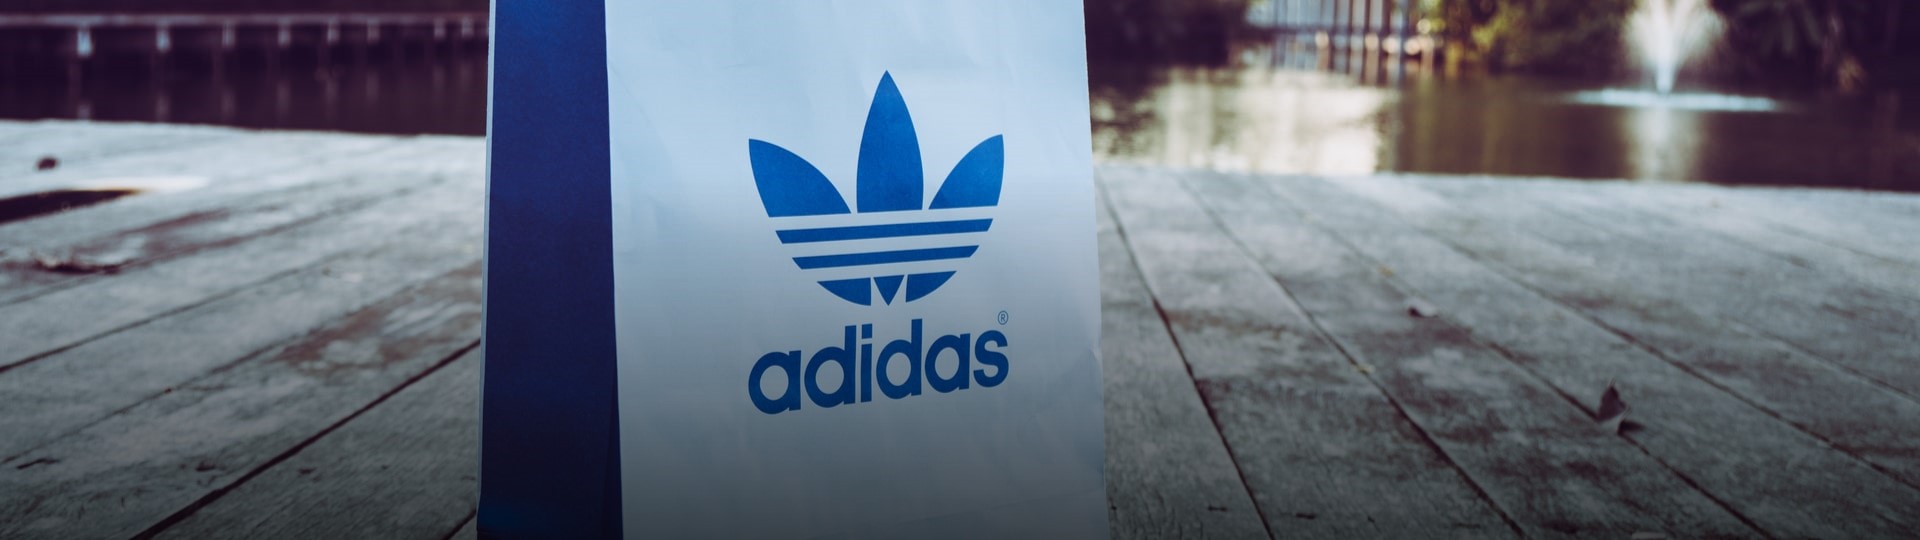 Adidas letos čeká návrat k silnému růstu